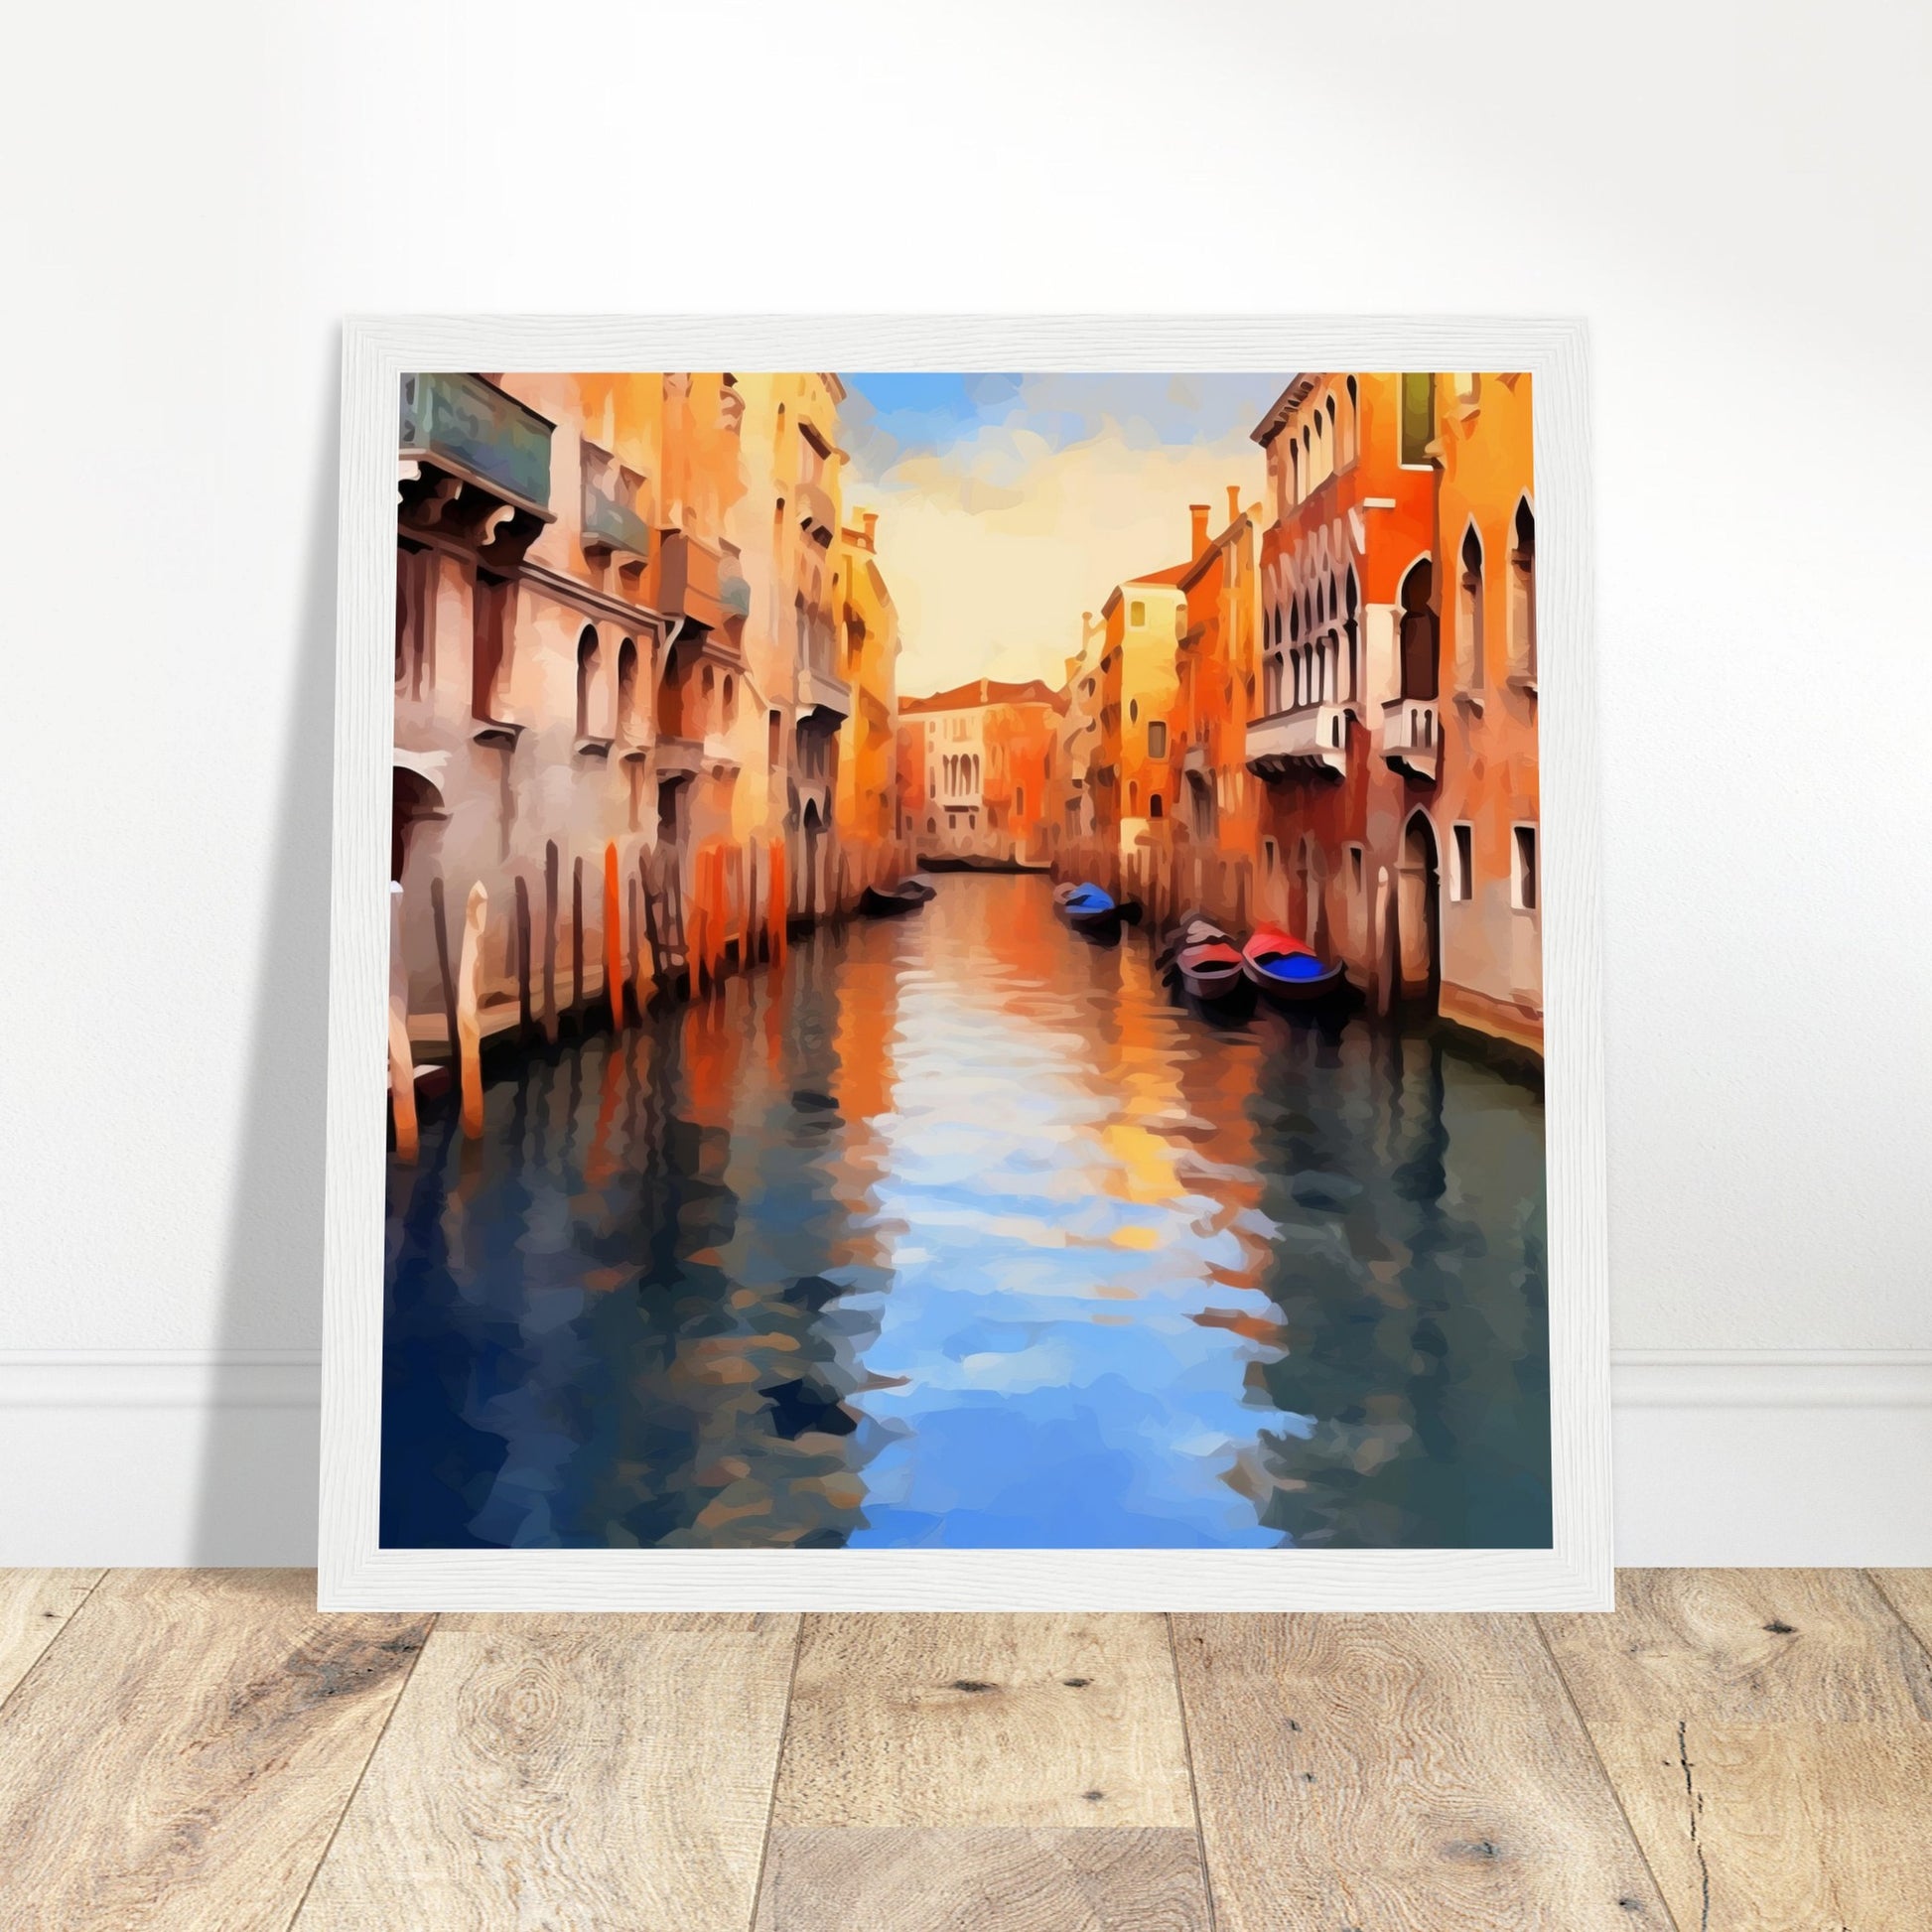 Venice Canals Artwork - Print Room Ltd Black frame 50x50 cm / 20x20"